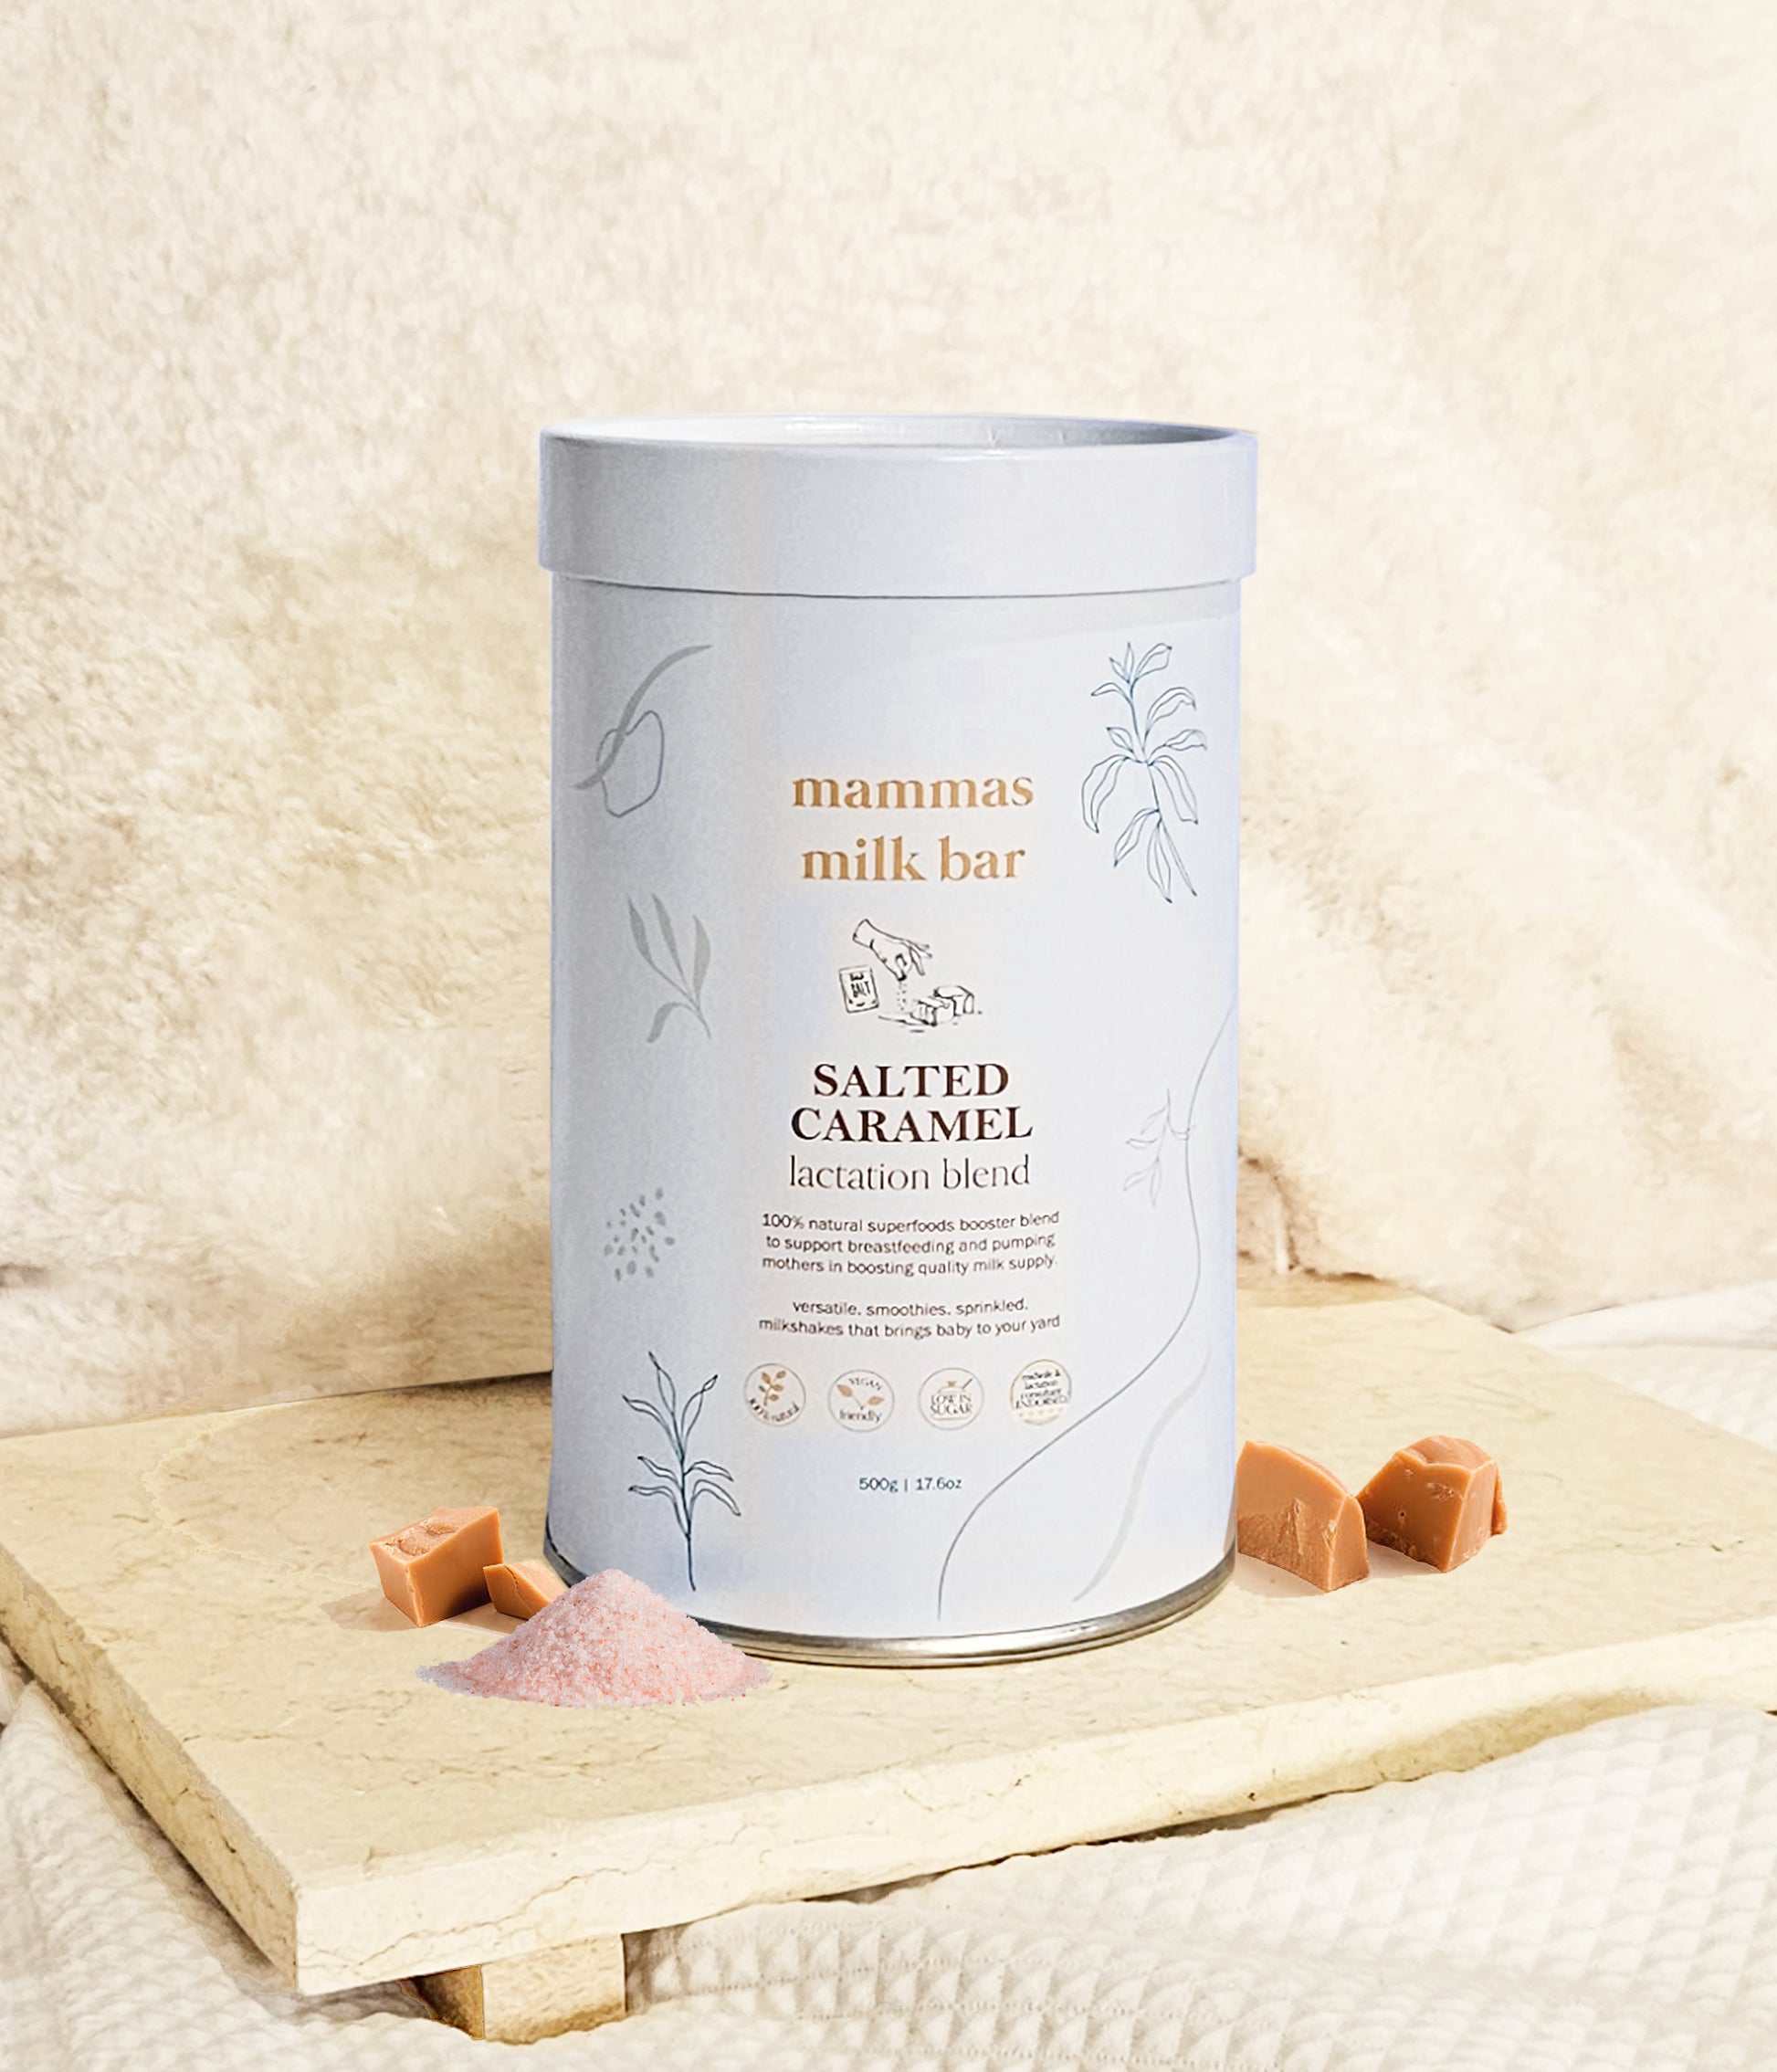 Salted caramel lactation blend mammas milk bar nz - Flourish Maternity online mum and baby shop